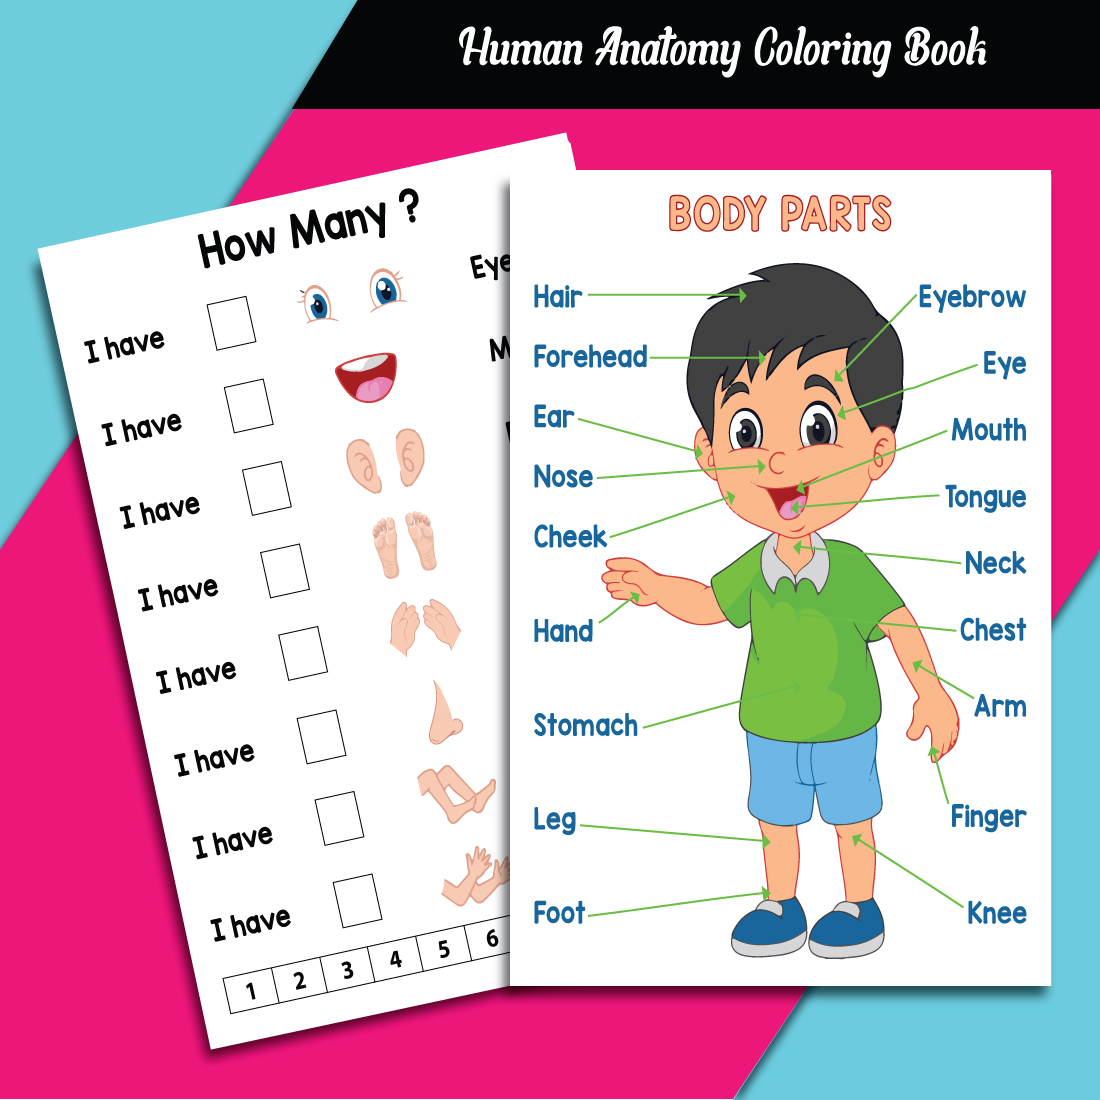 Human Anatomy Coloring Book Interior preview image.